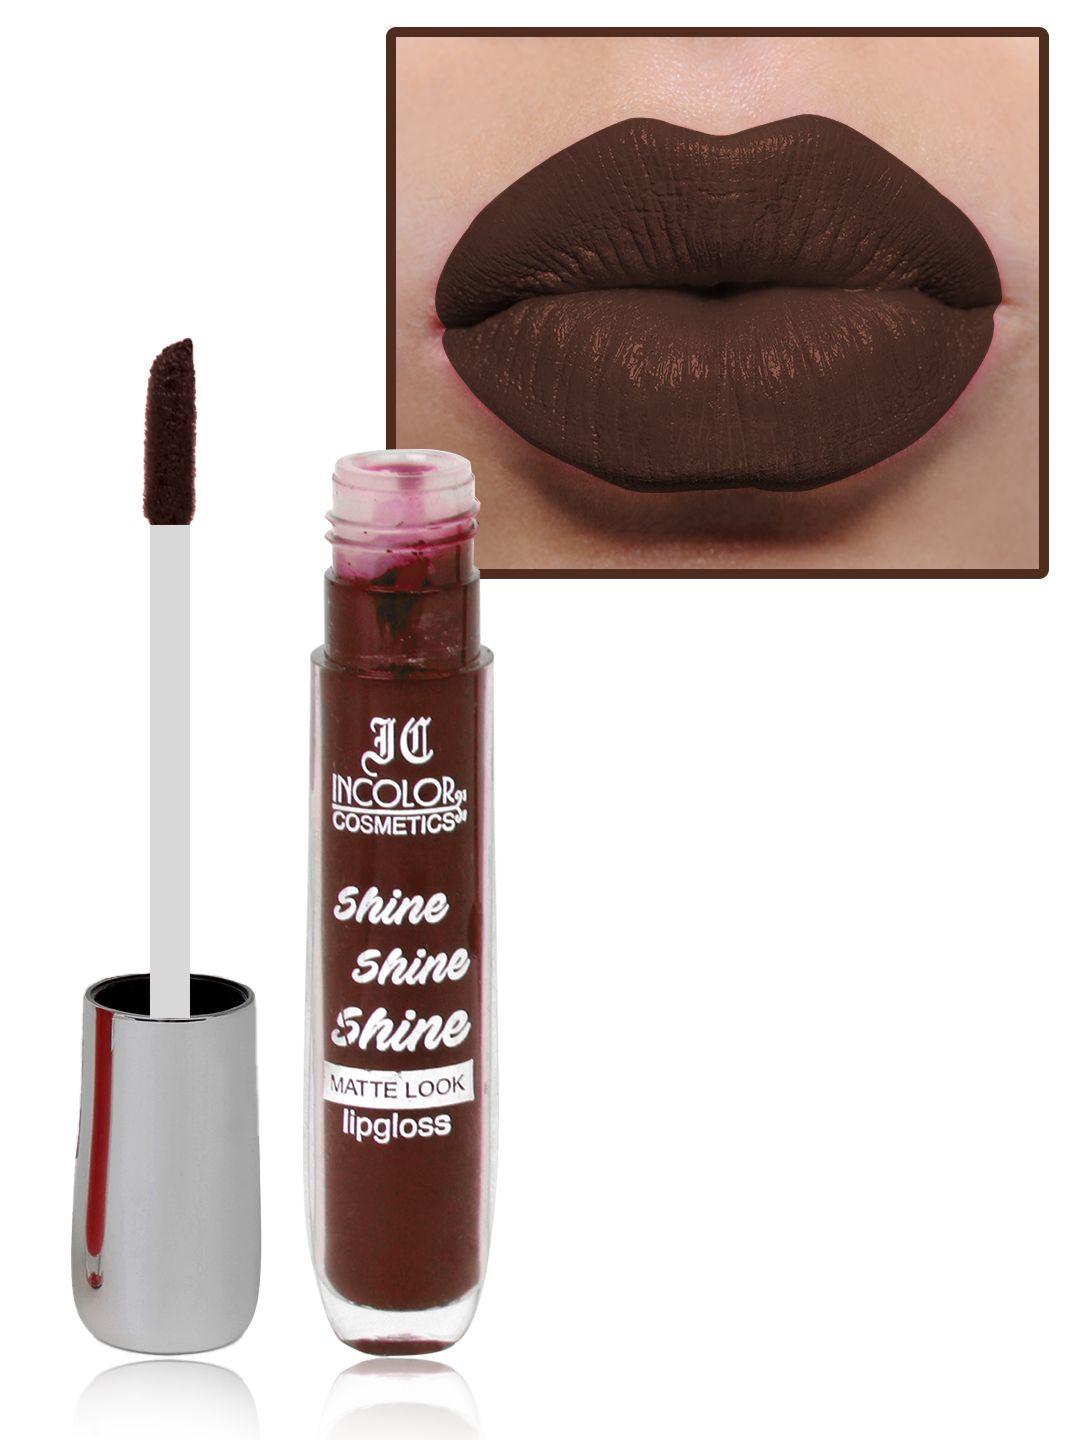 incolor shine shine shine long-wearing lightweight matte look lip gloss 8ml - shade 06